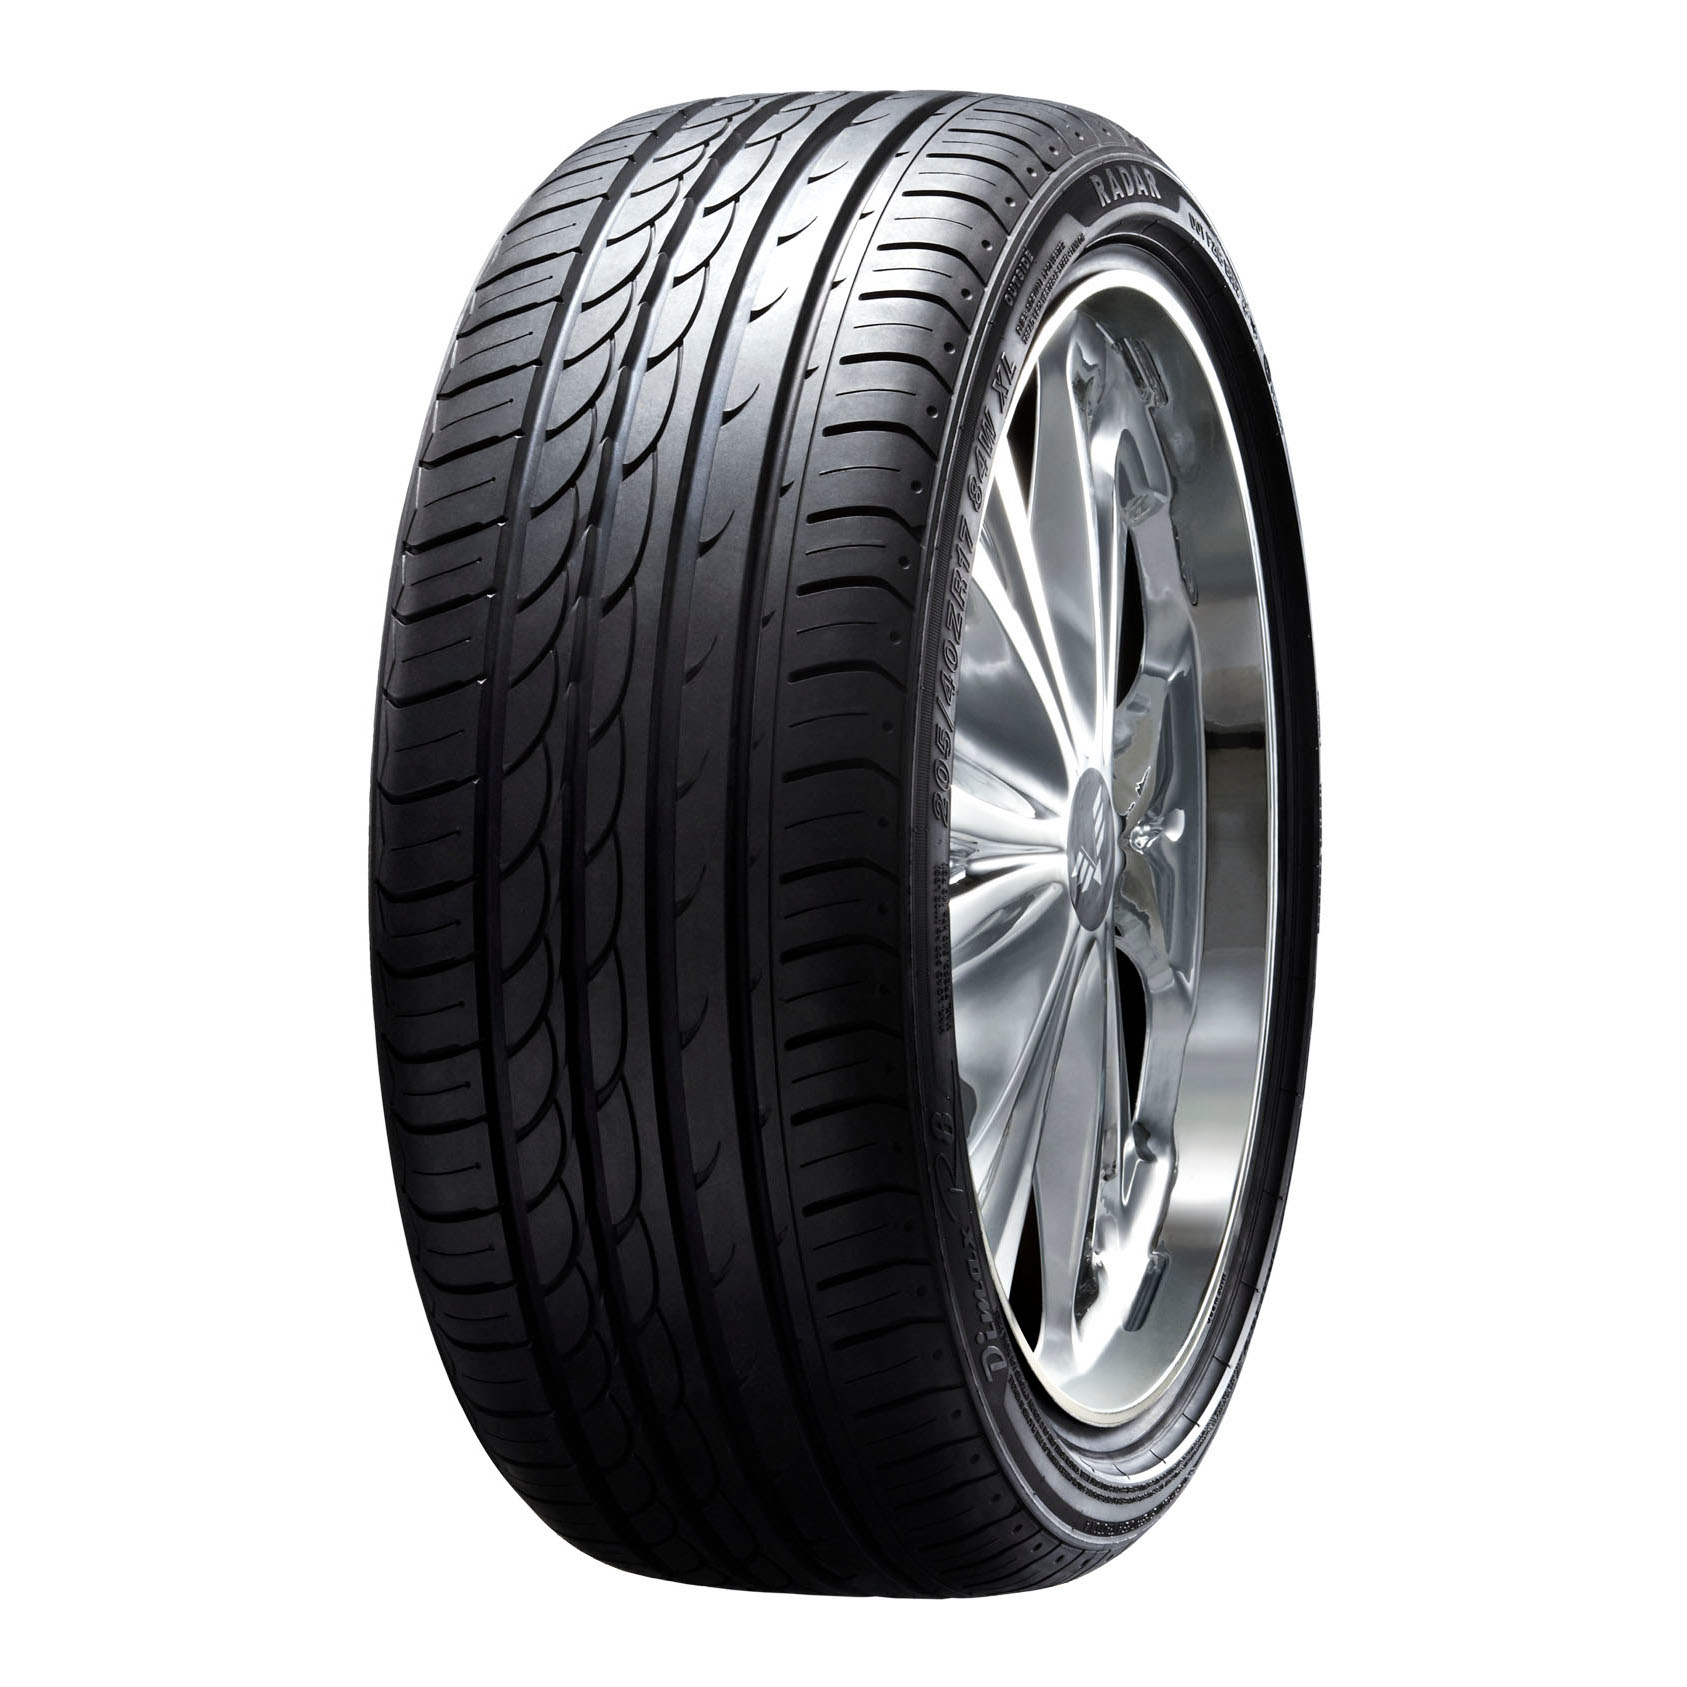 Radar DIMAX R8  215/50ZR17   Automotive   Tires & Wheels   Tires   Car